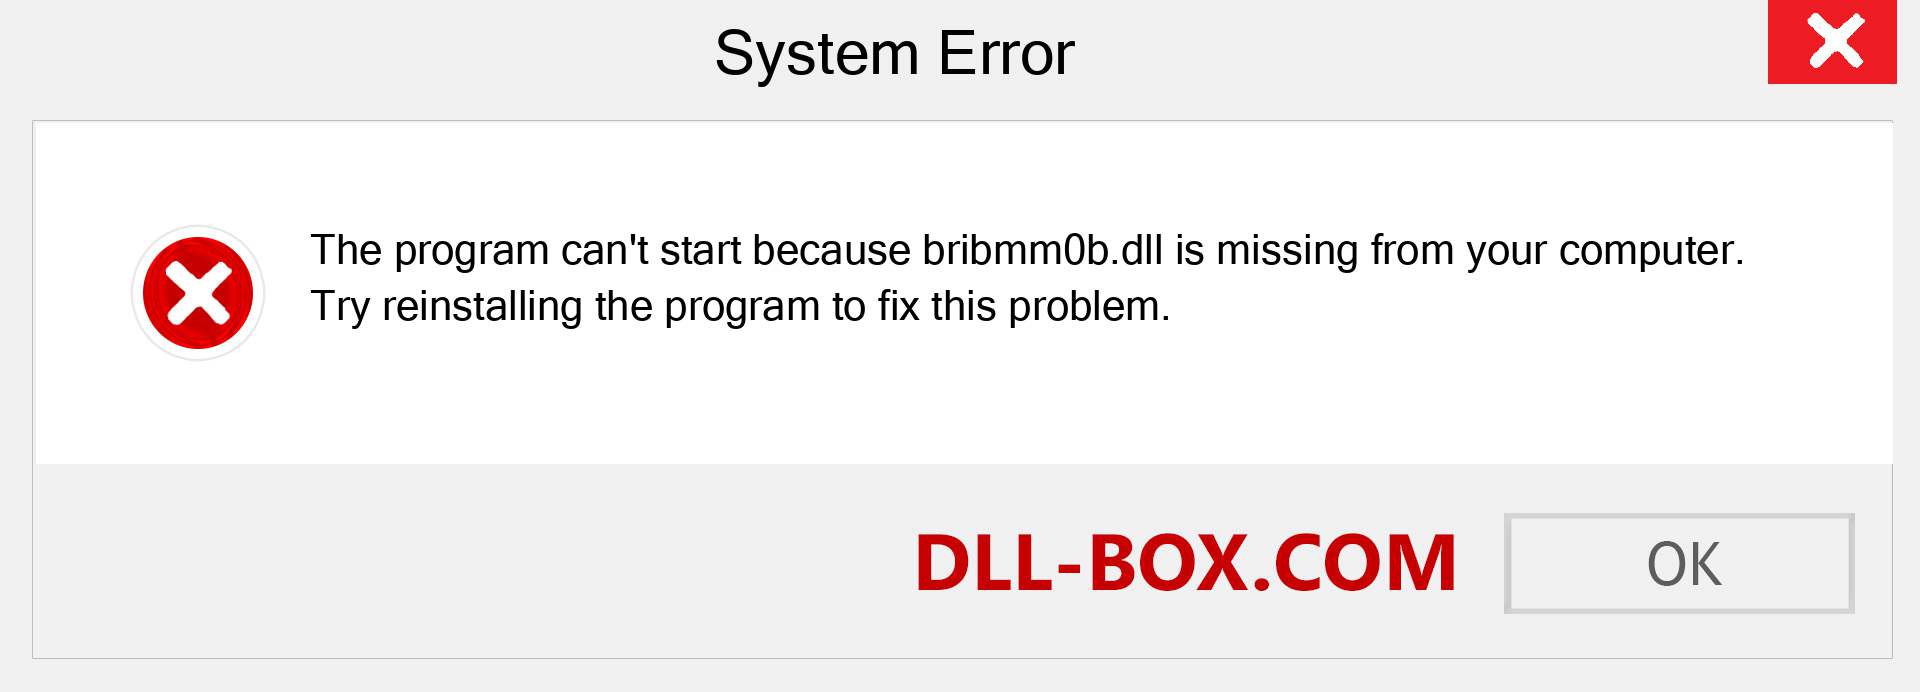  bribmm0b.dll file is missing?. Download for Windows 7, 8, 10 - Fix  bribmm0b dll Missing Error on Windows, photos, images